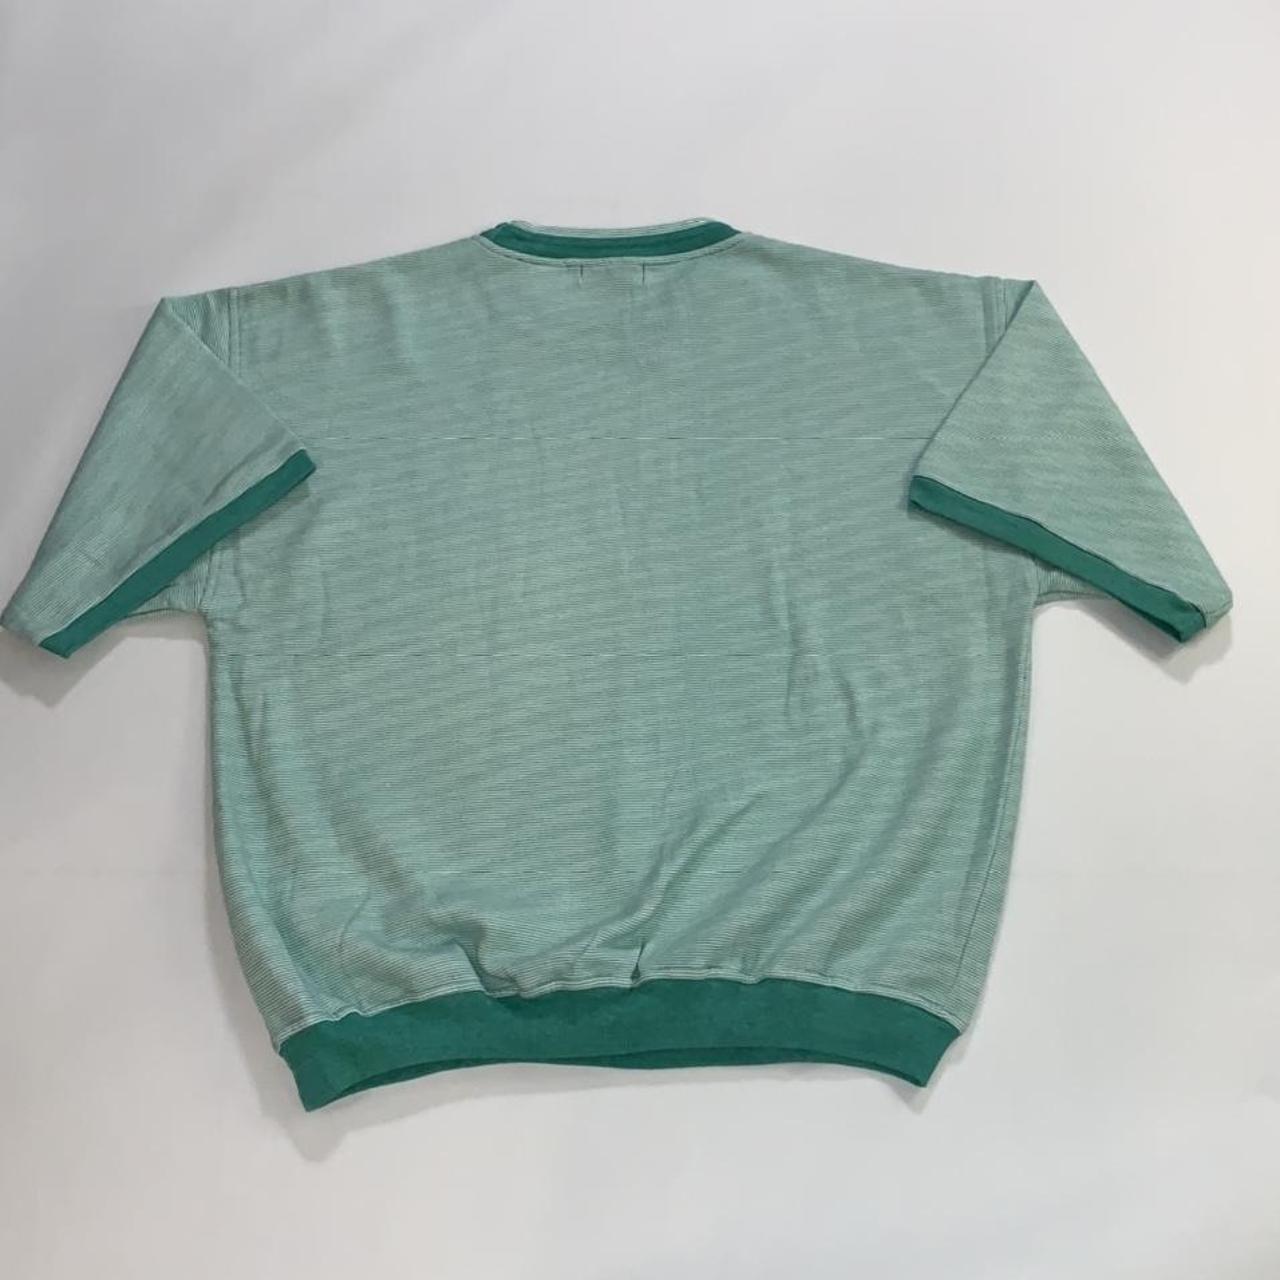 Product Image 2 - Short sleeved sweatshirt striper.

 *